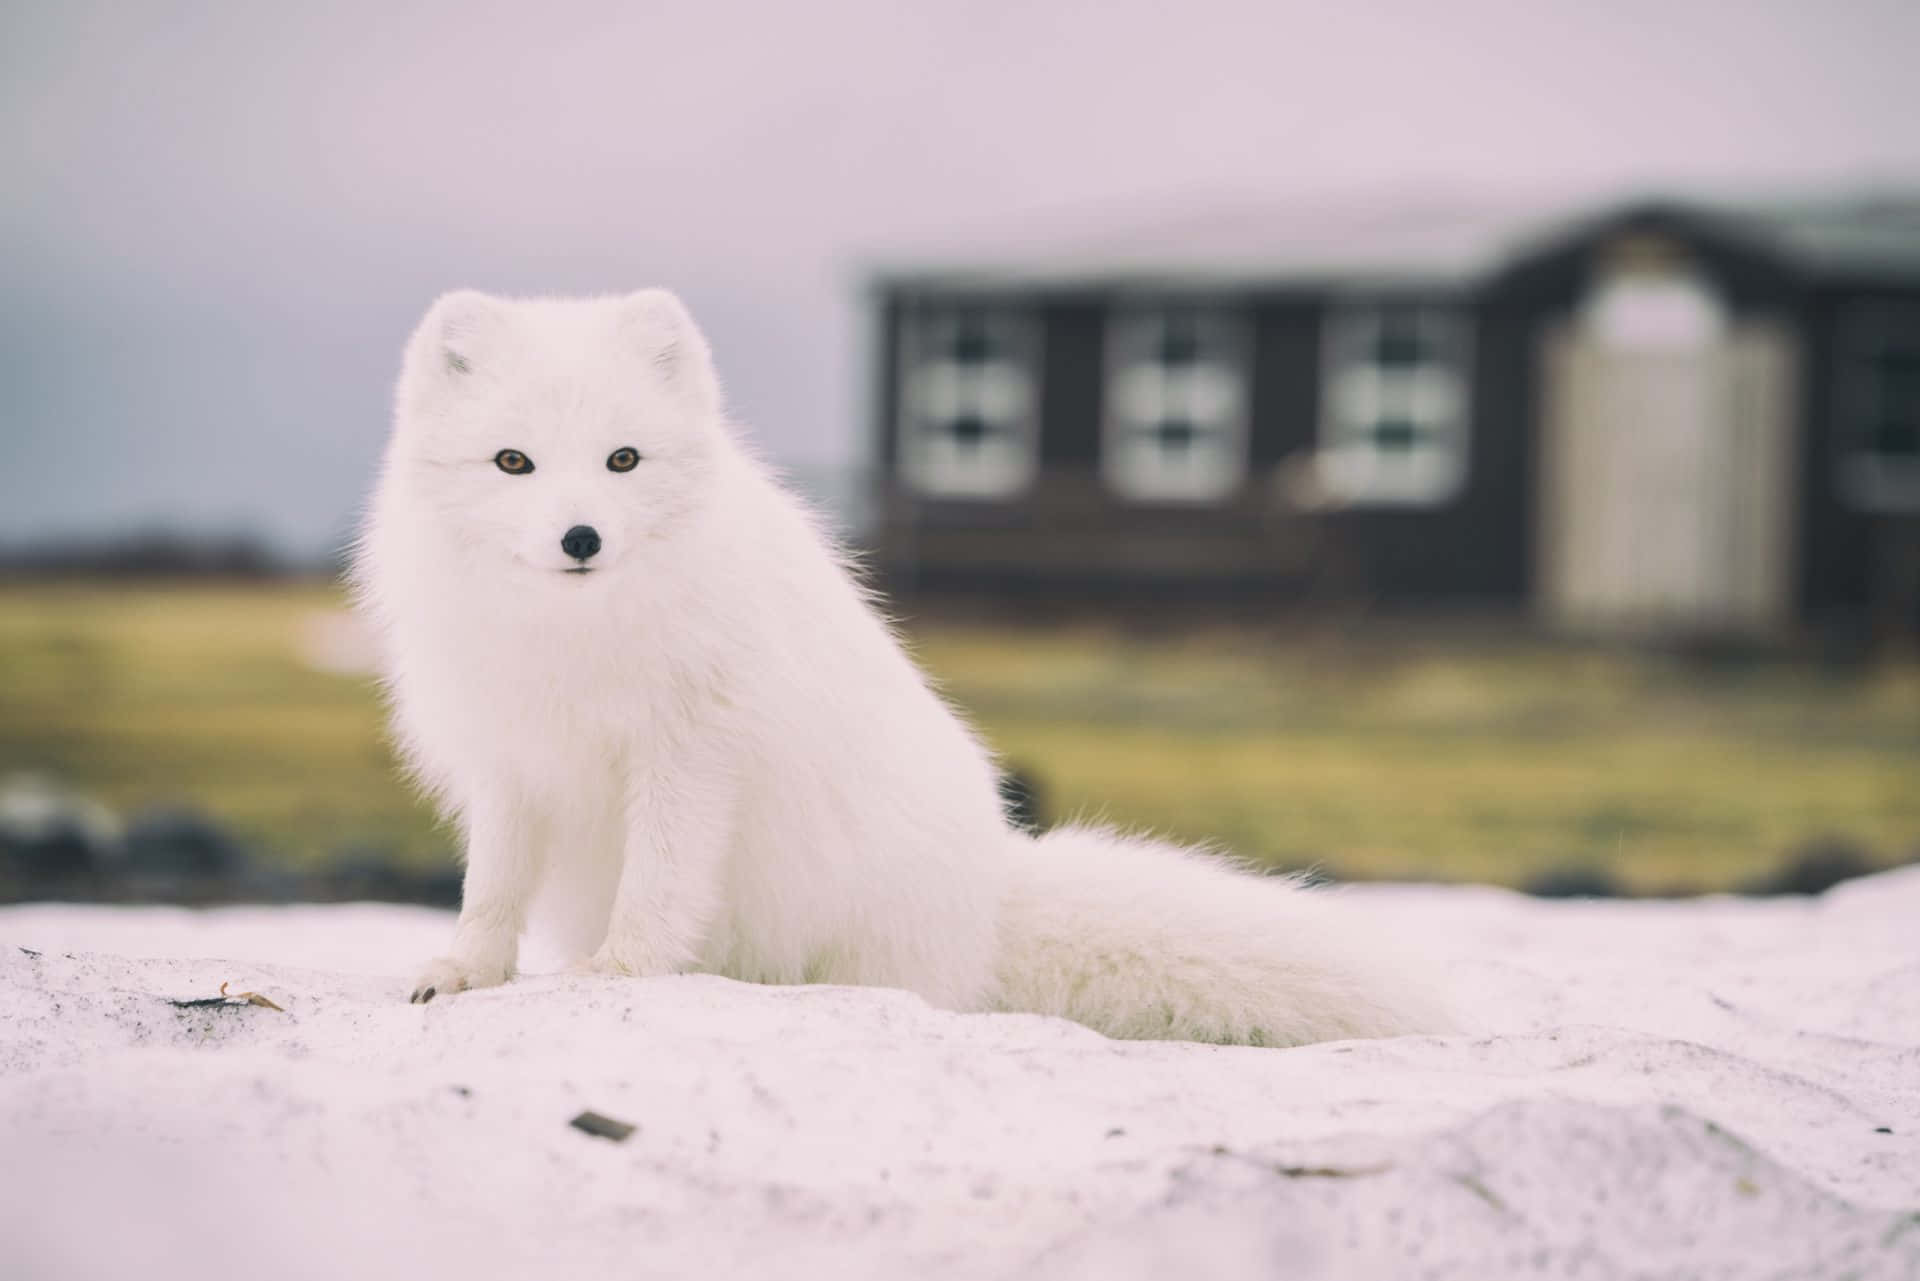 An Arctic Fox waddles through its icy habitat